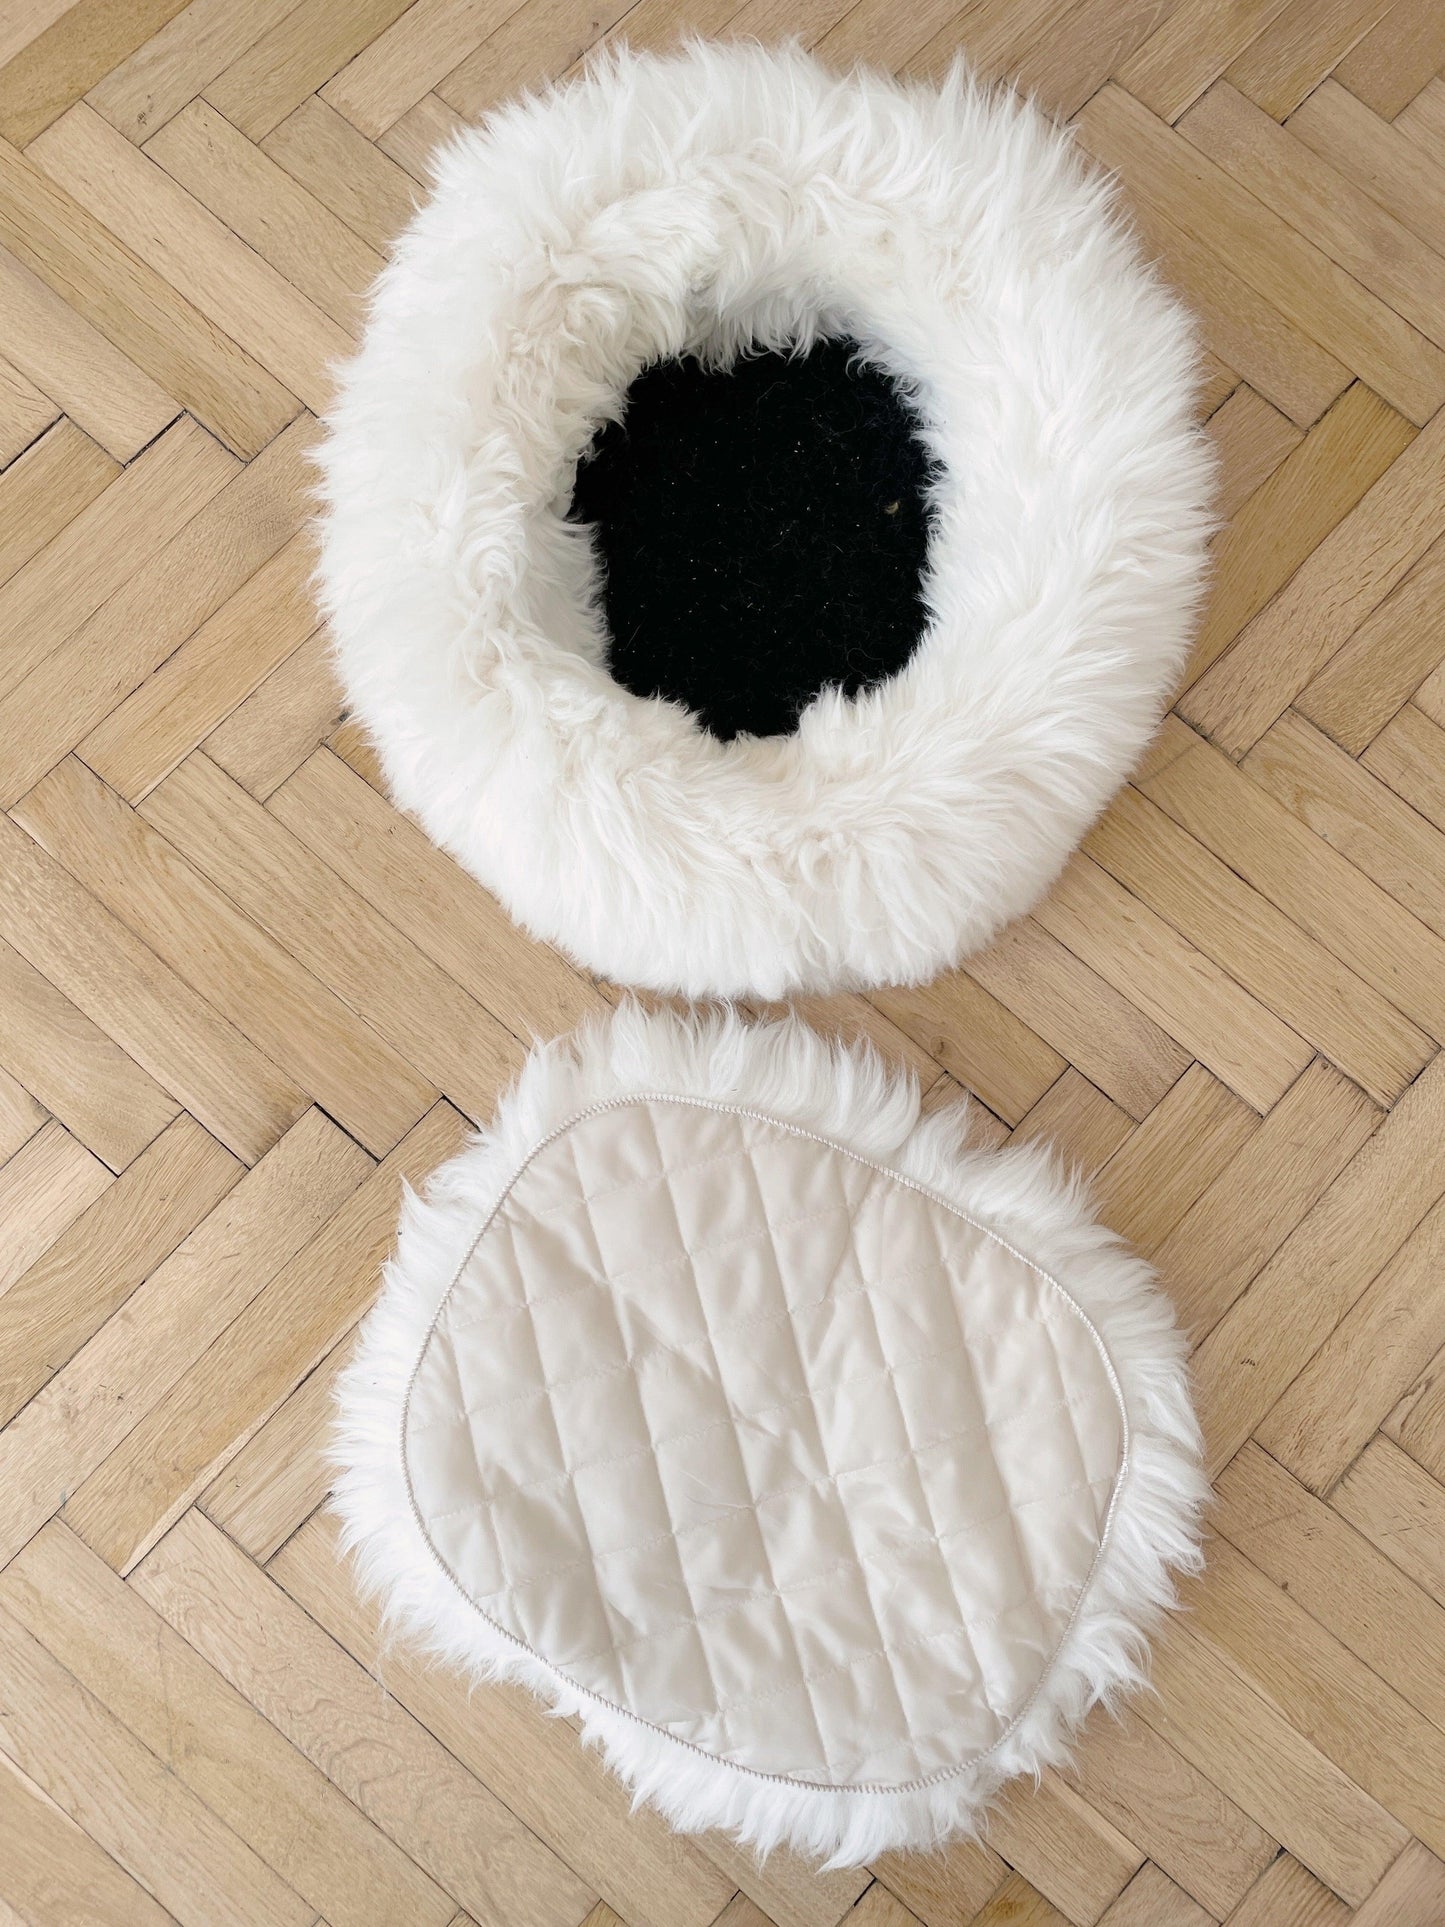 Round Natural Sheepskin Pet Bed